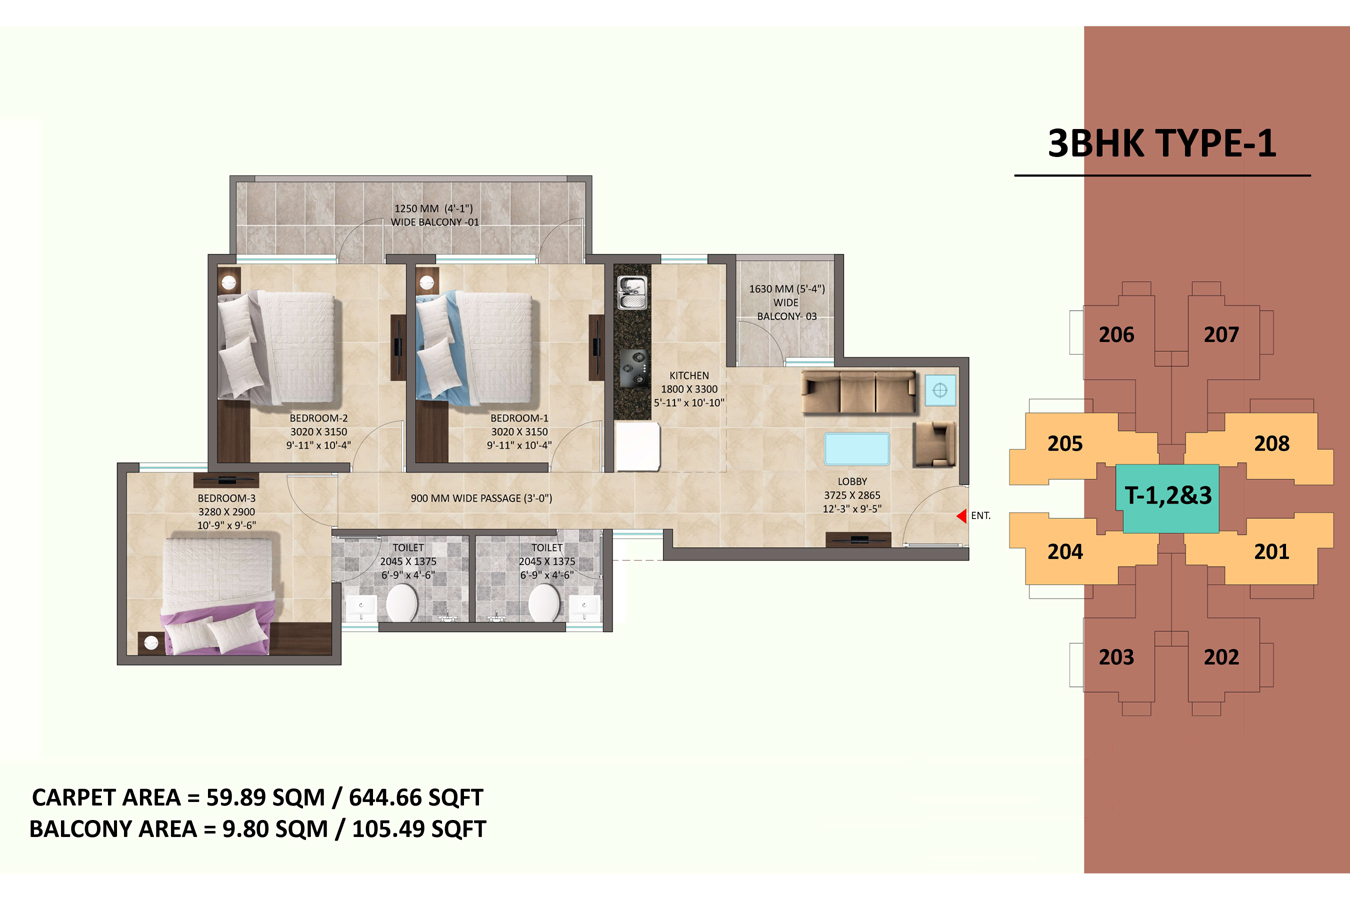 Pareena Rama Homes Floor Plan